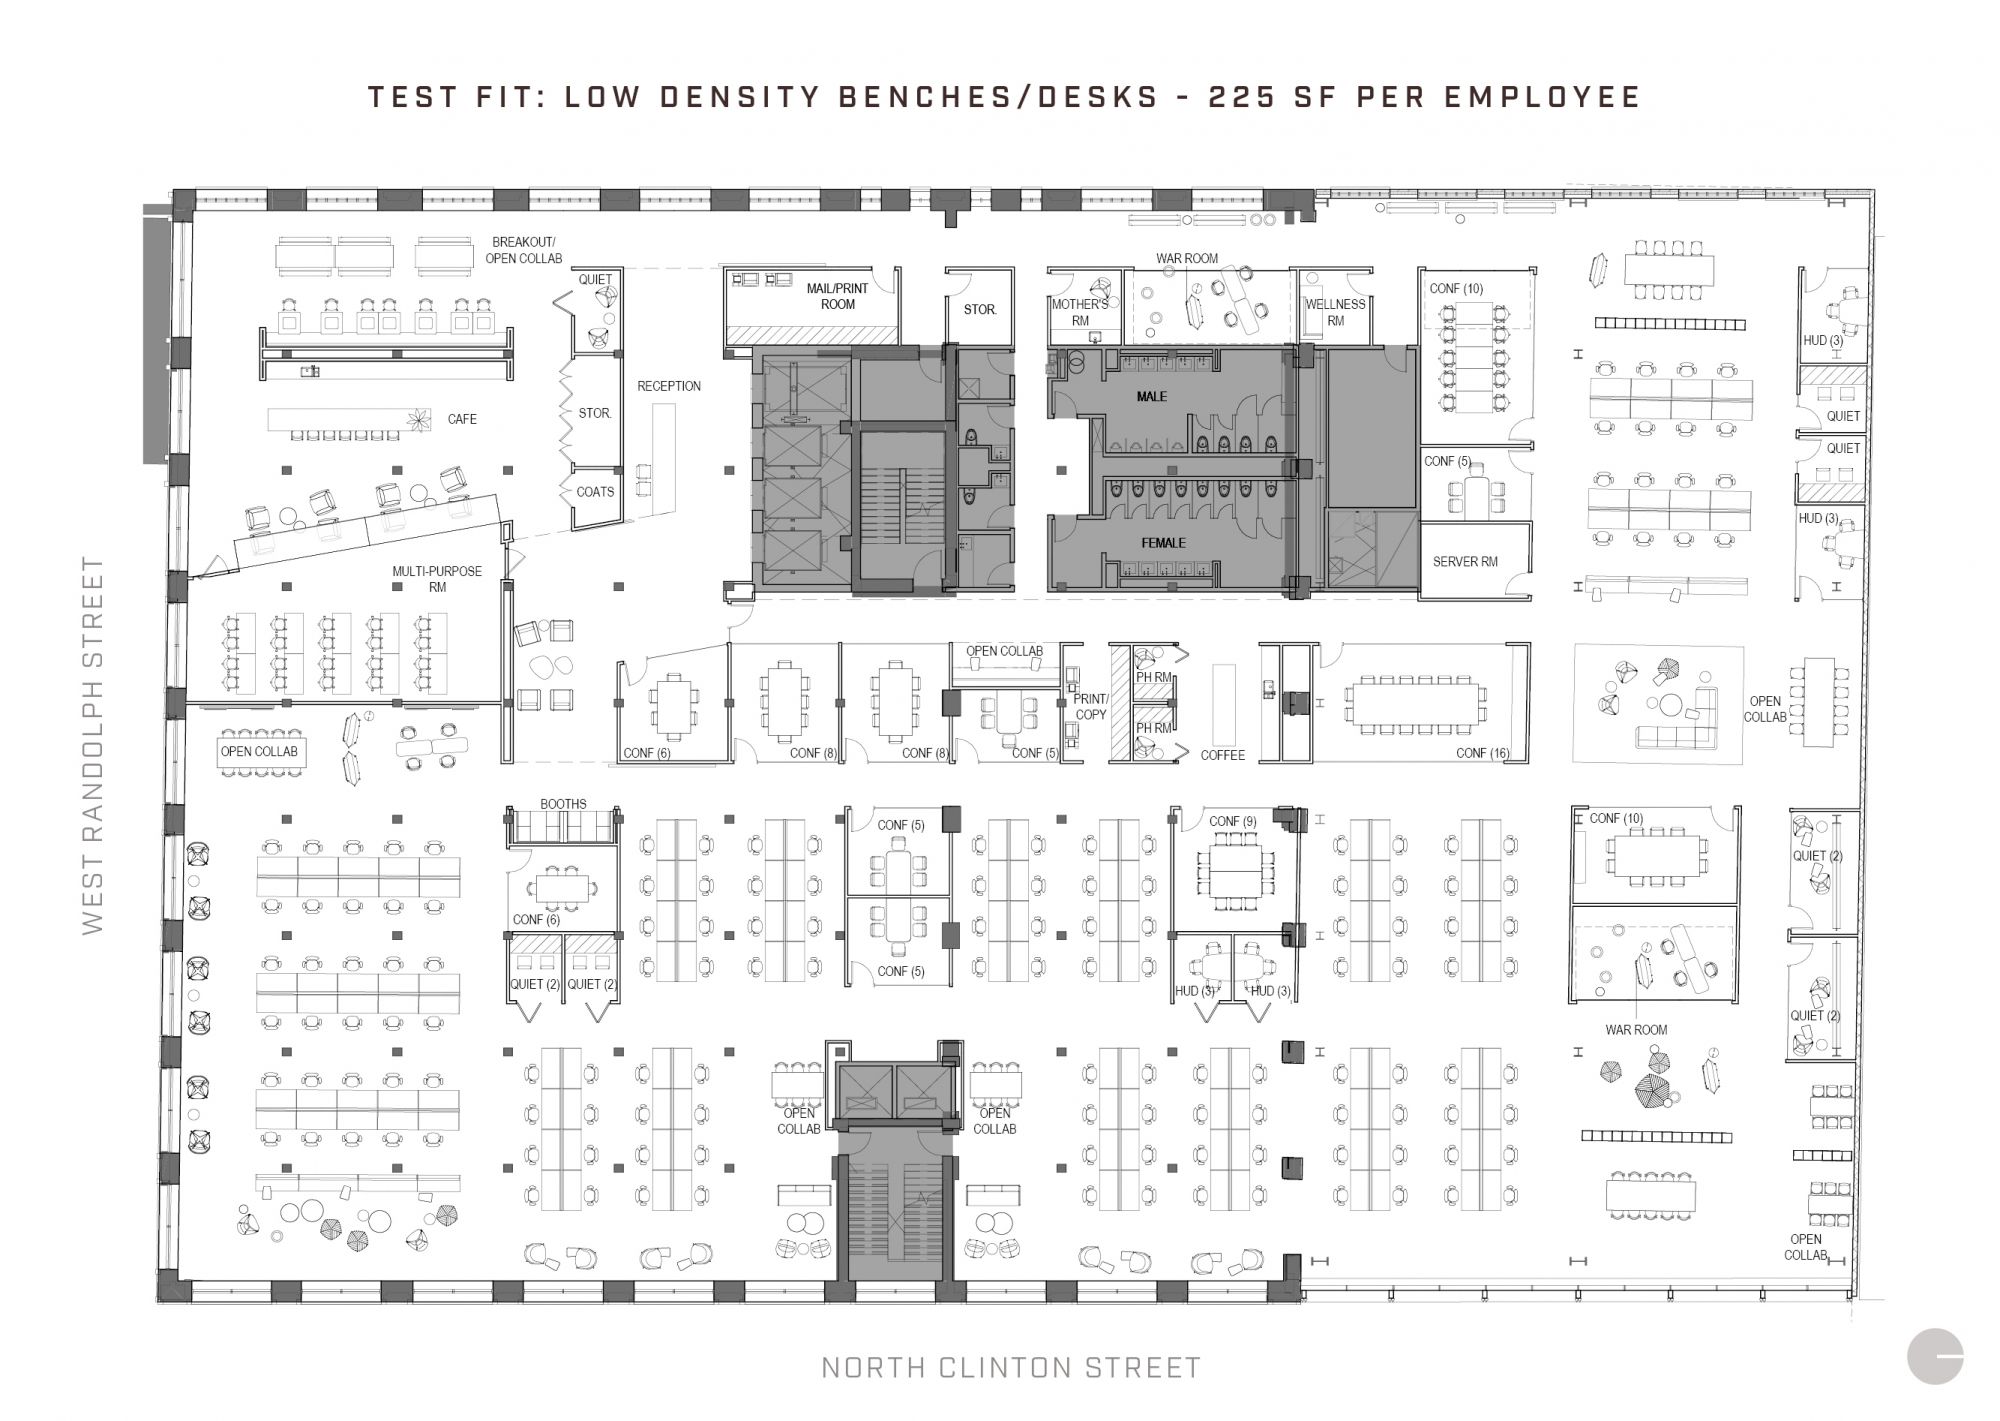 550 W Randolph Test Fit Low Density